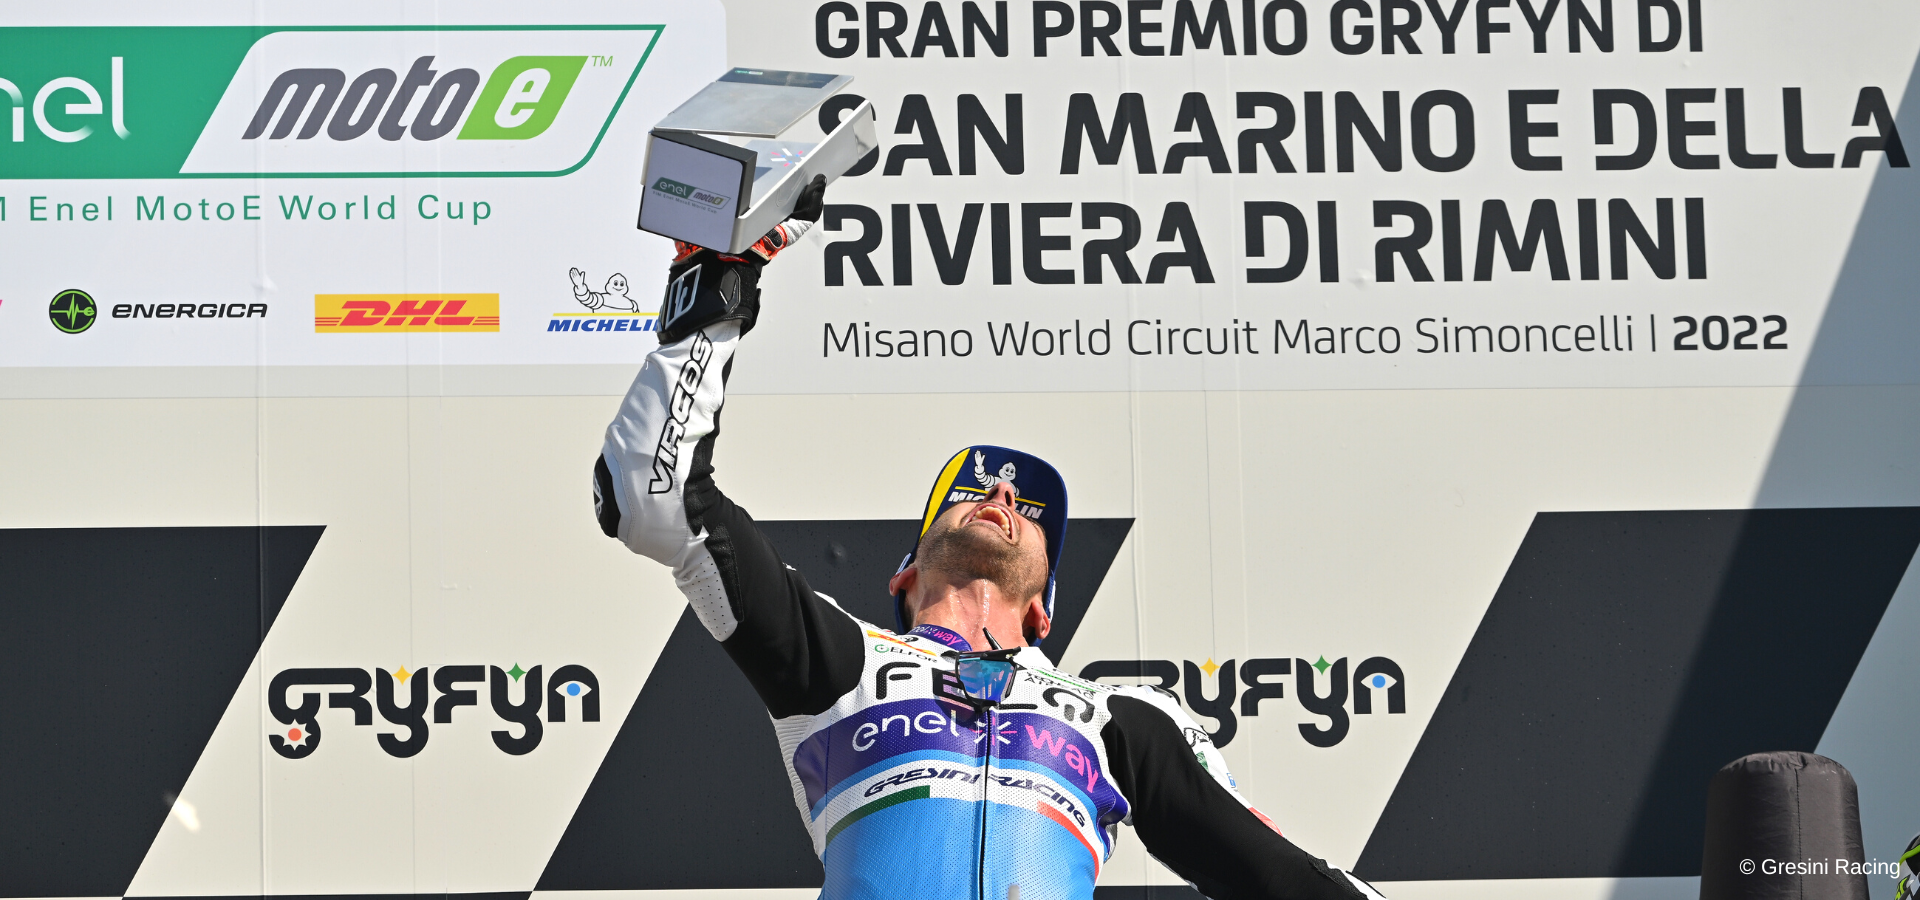 Matteo Ferrari on the final podium of the MotoE World Cup 2022